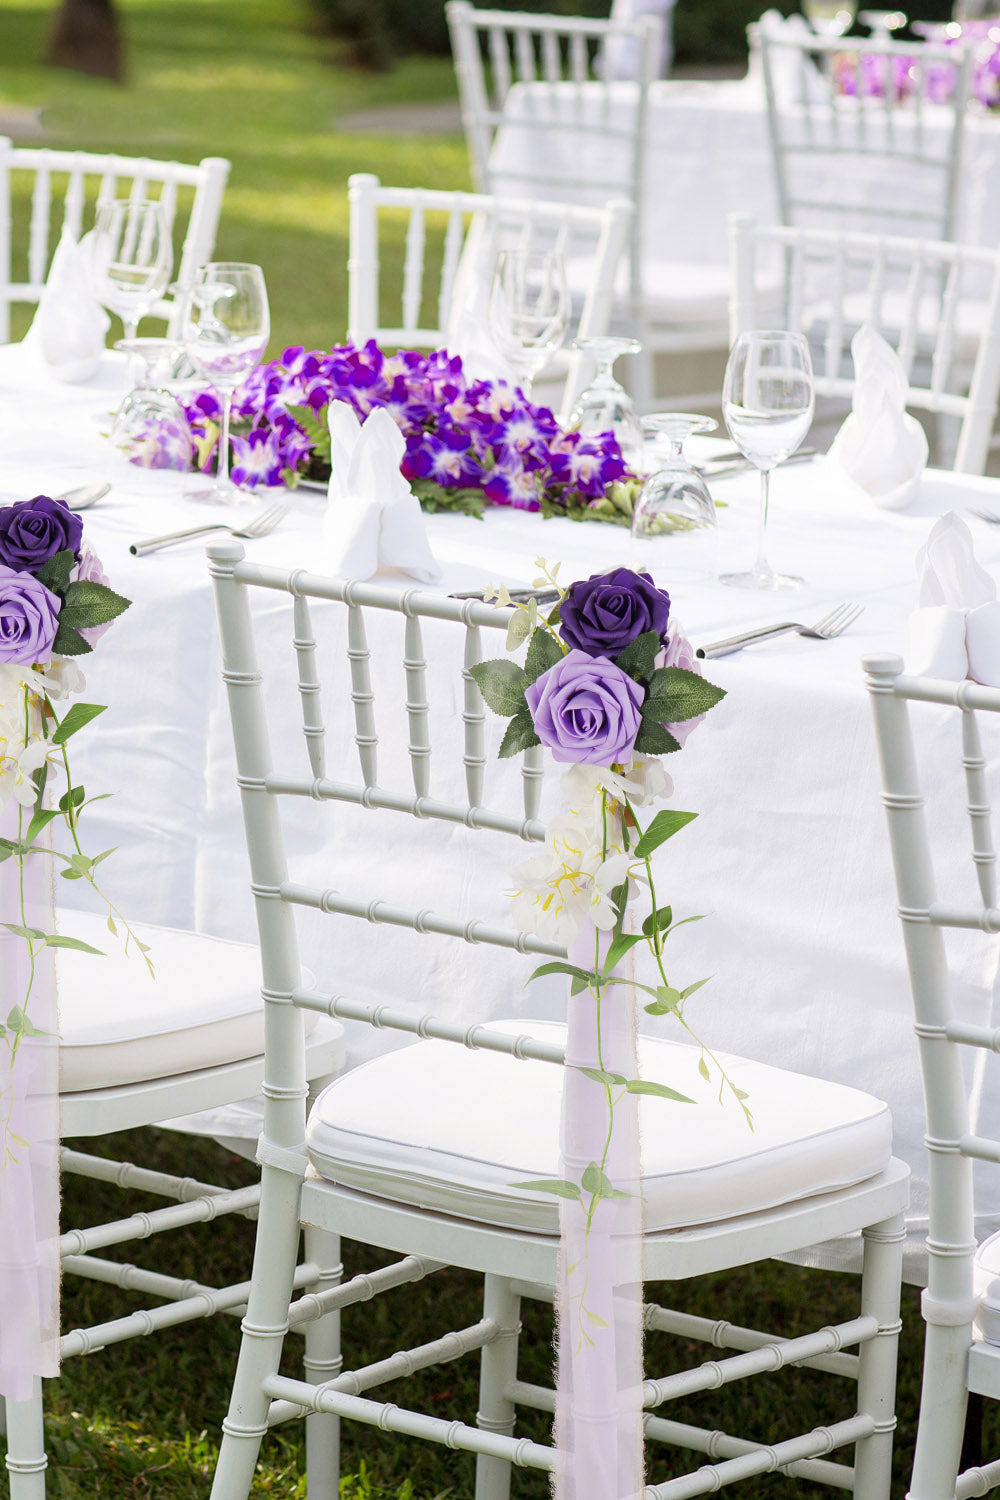 Handmade Wedding Aisle Decorations Chair Flowers Set of 8 - Lavender Purple